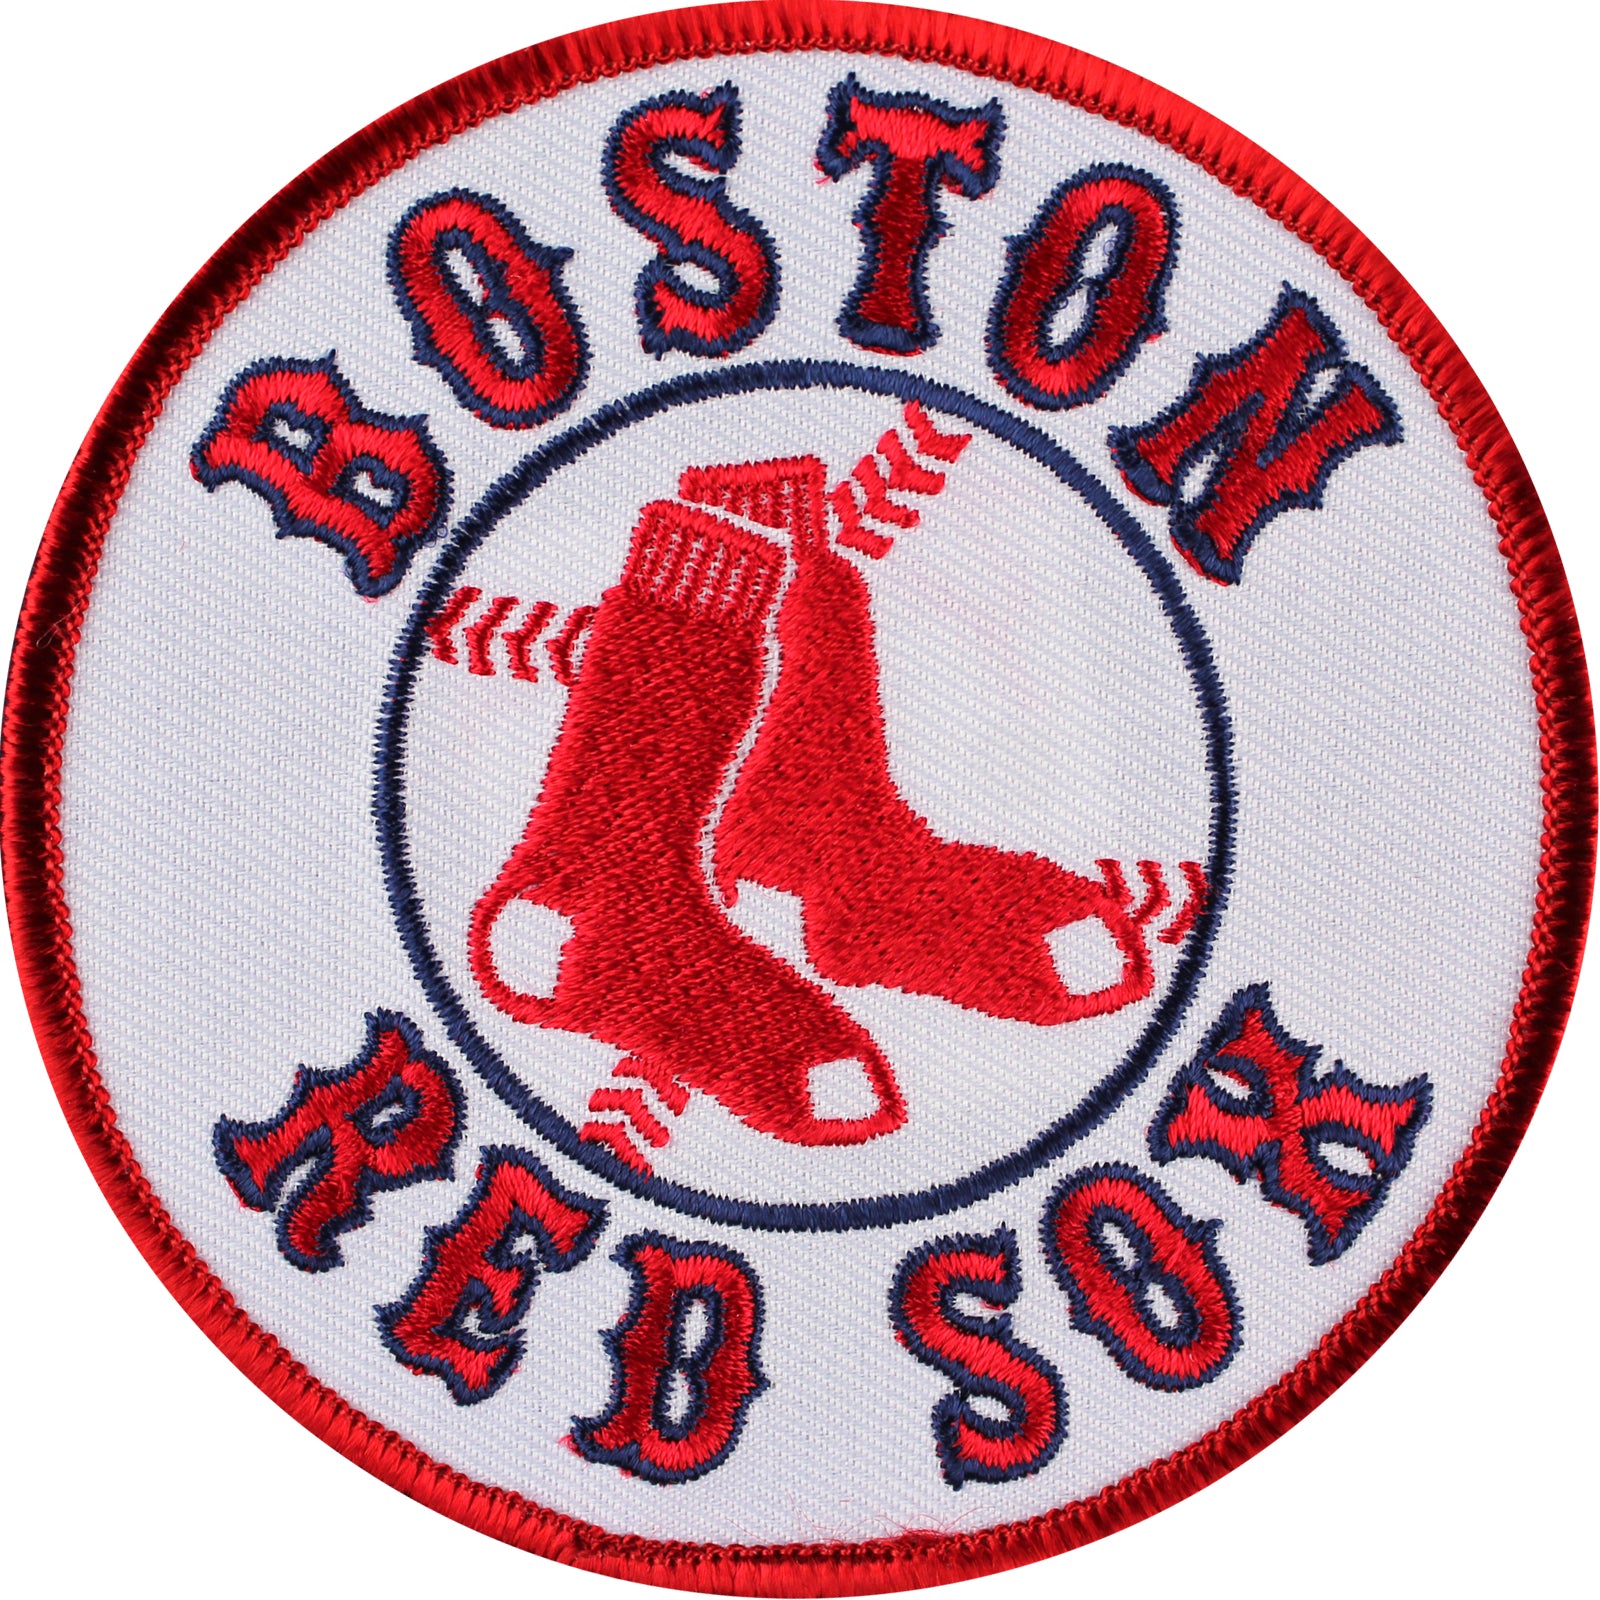 BOSTON RED SOX - SOCKS LOGO JERSEY SLEEVE PATCH MLB LICENSED